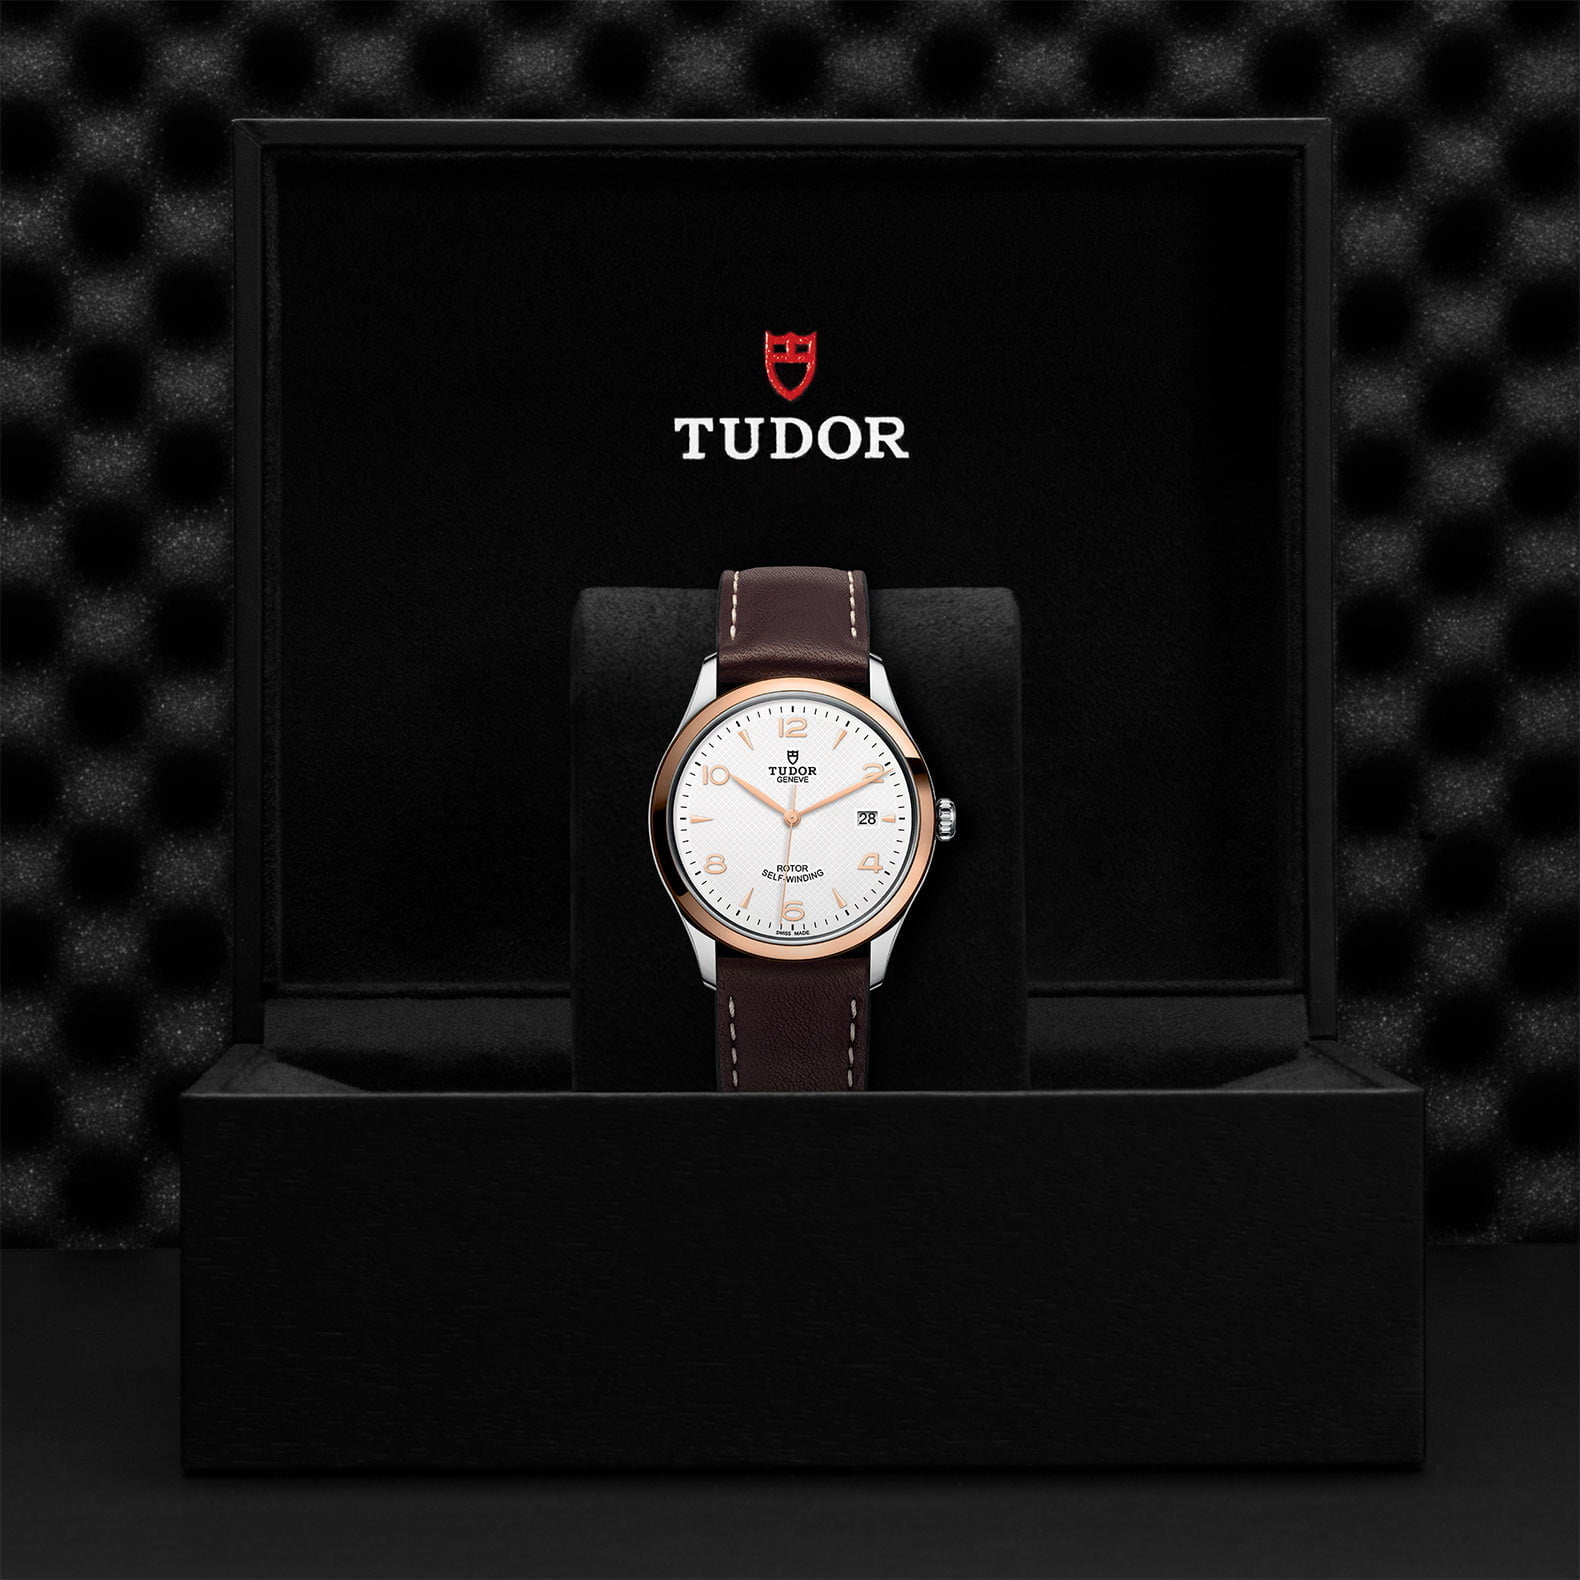 M91551 0010 Tudor Watch Carousel 4 4 10 2023 1